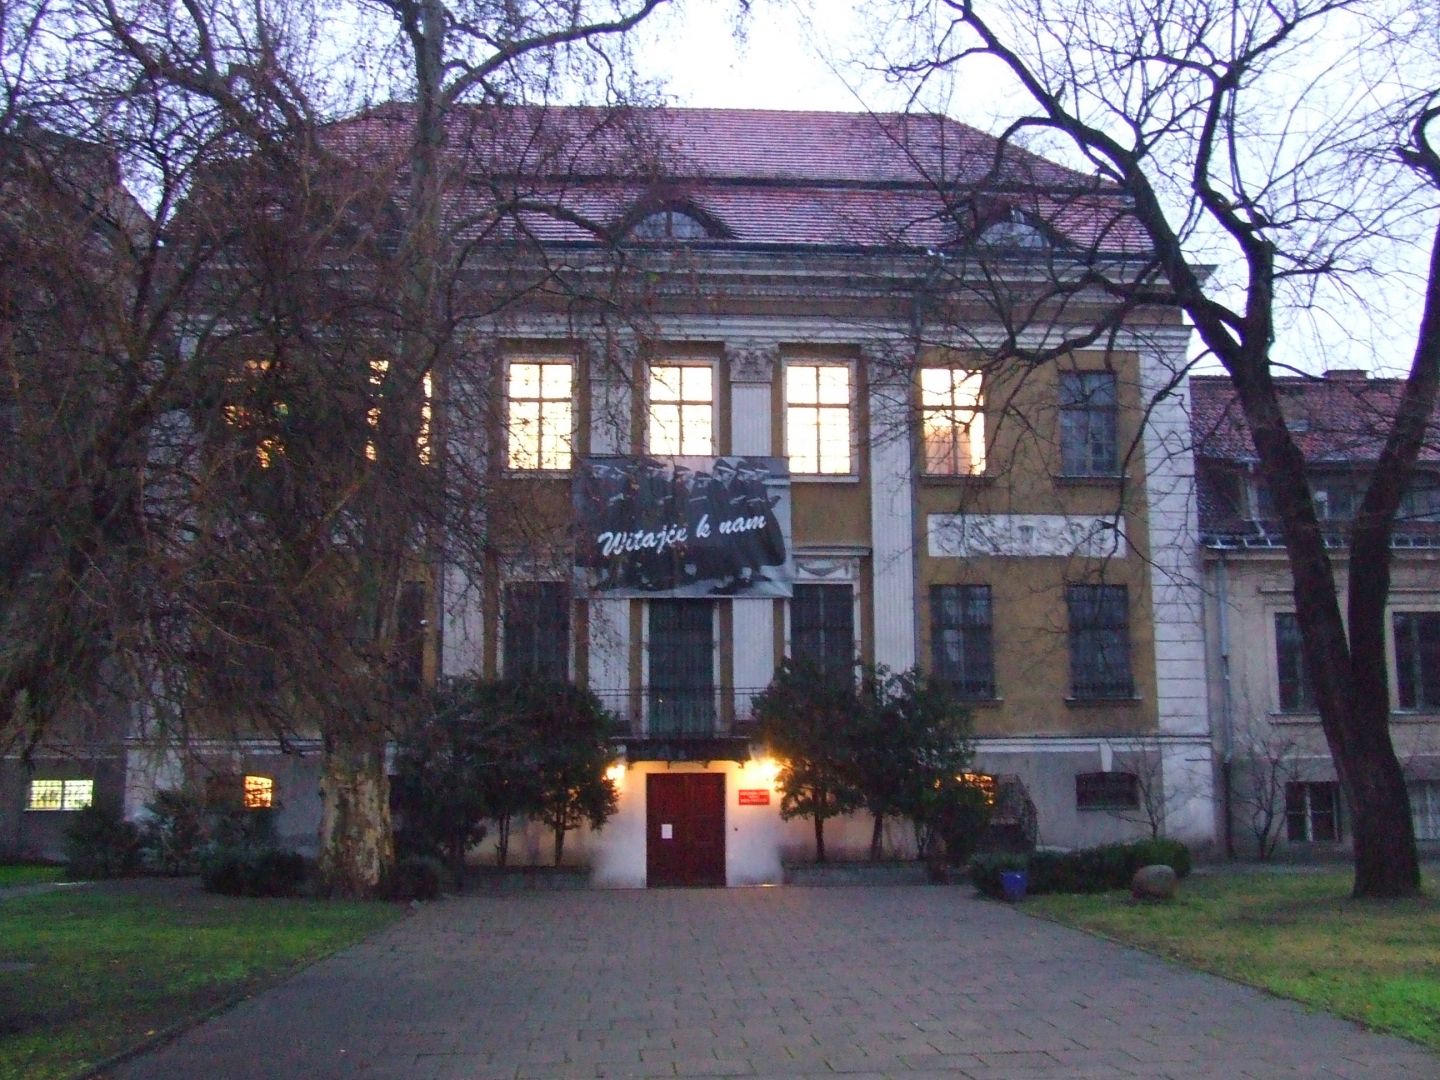 Poznan Ethnographic Museum